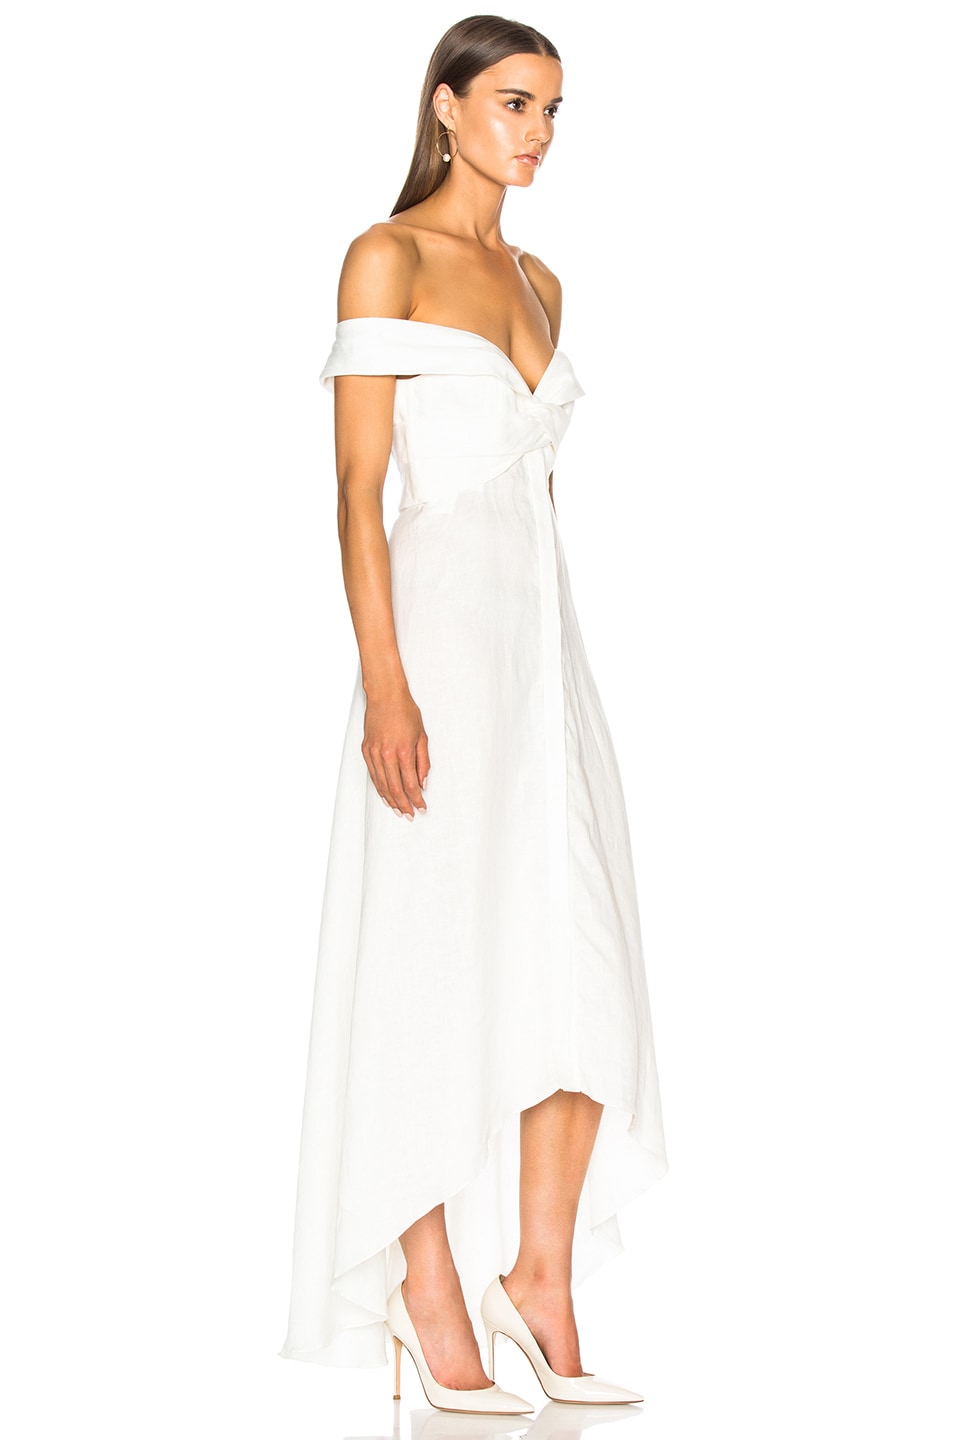 Johanna Ortiz Lupe Linen Dress in Western White | FWRD